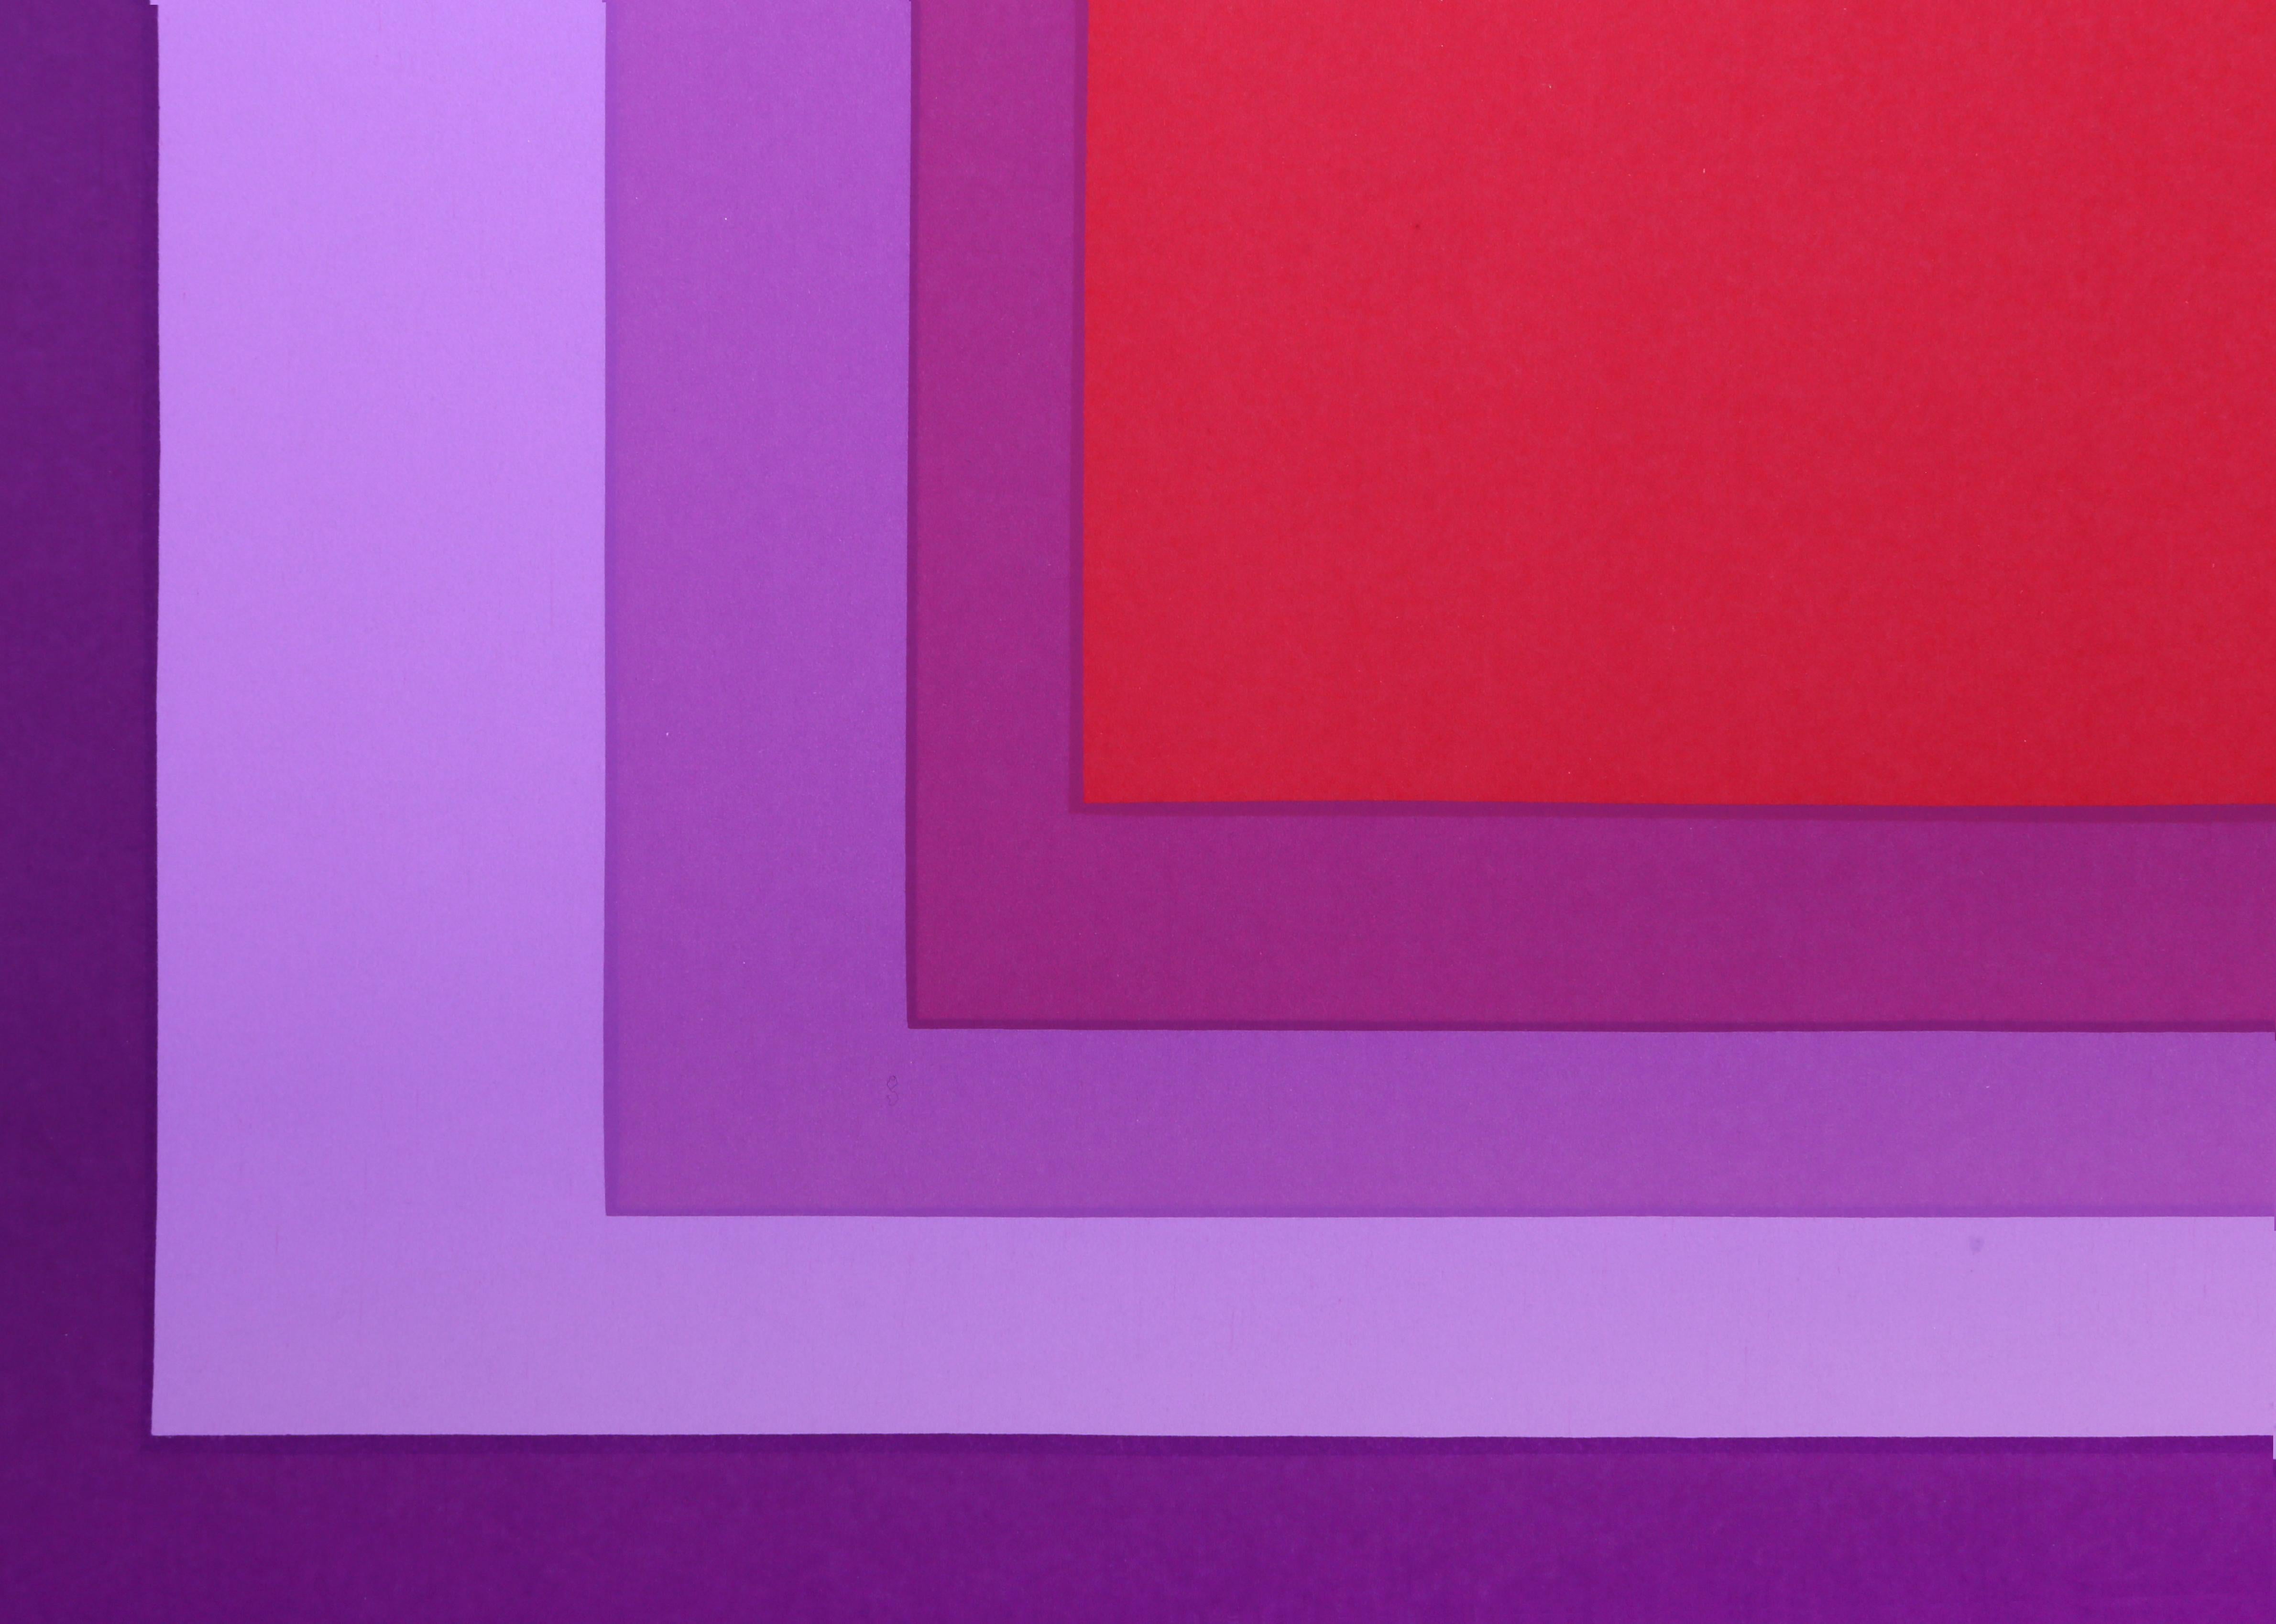 A colorful geometric screenprint by American artist Barbara Lynch Zinkel inspired by the Josef Albers 